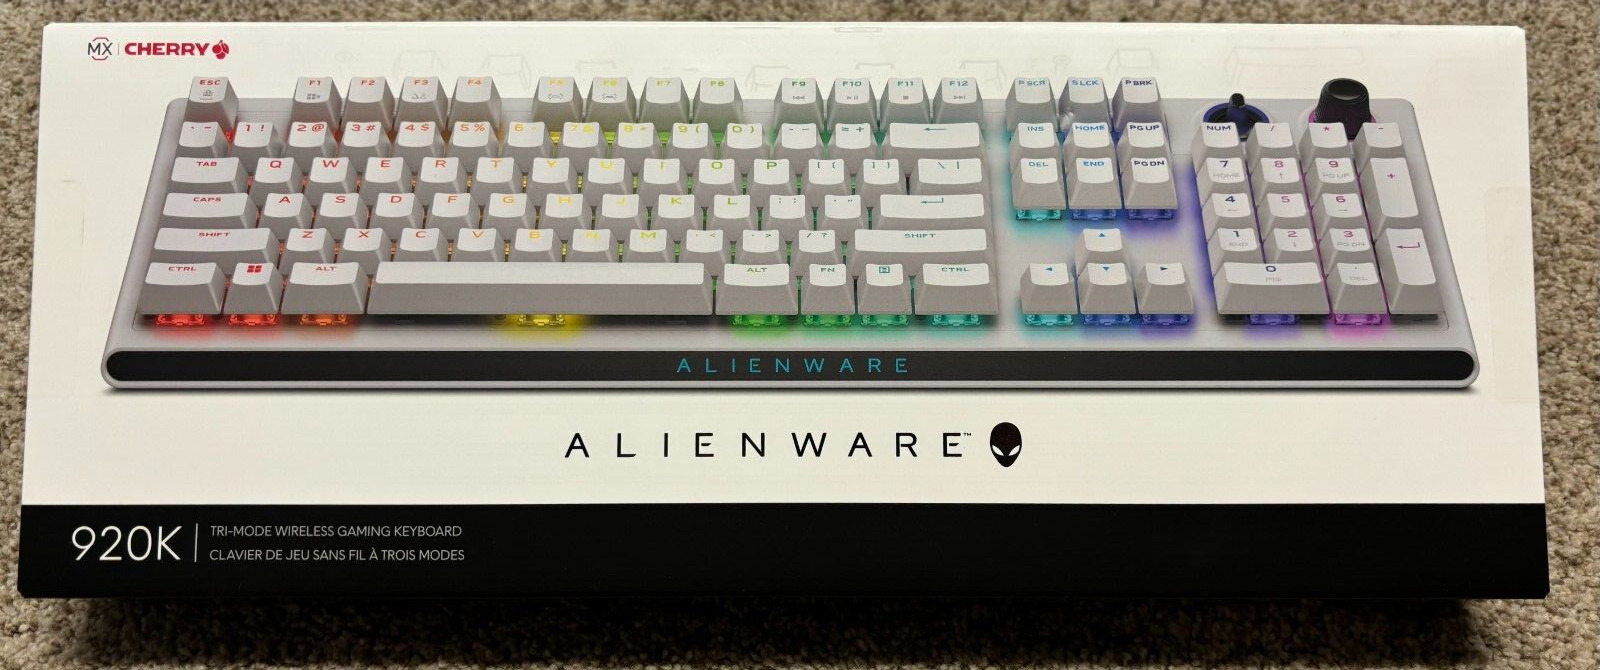 Alienware AW920k TRI-Mode RGB Wireless Gaming Keyboard - Cherry